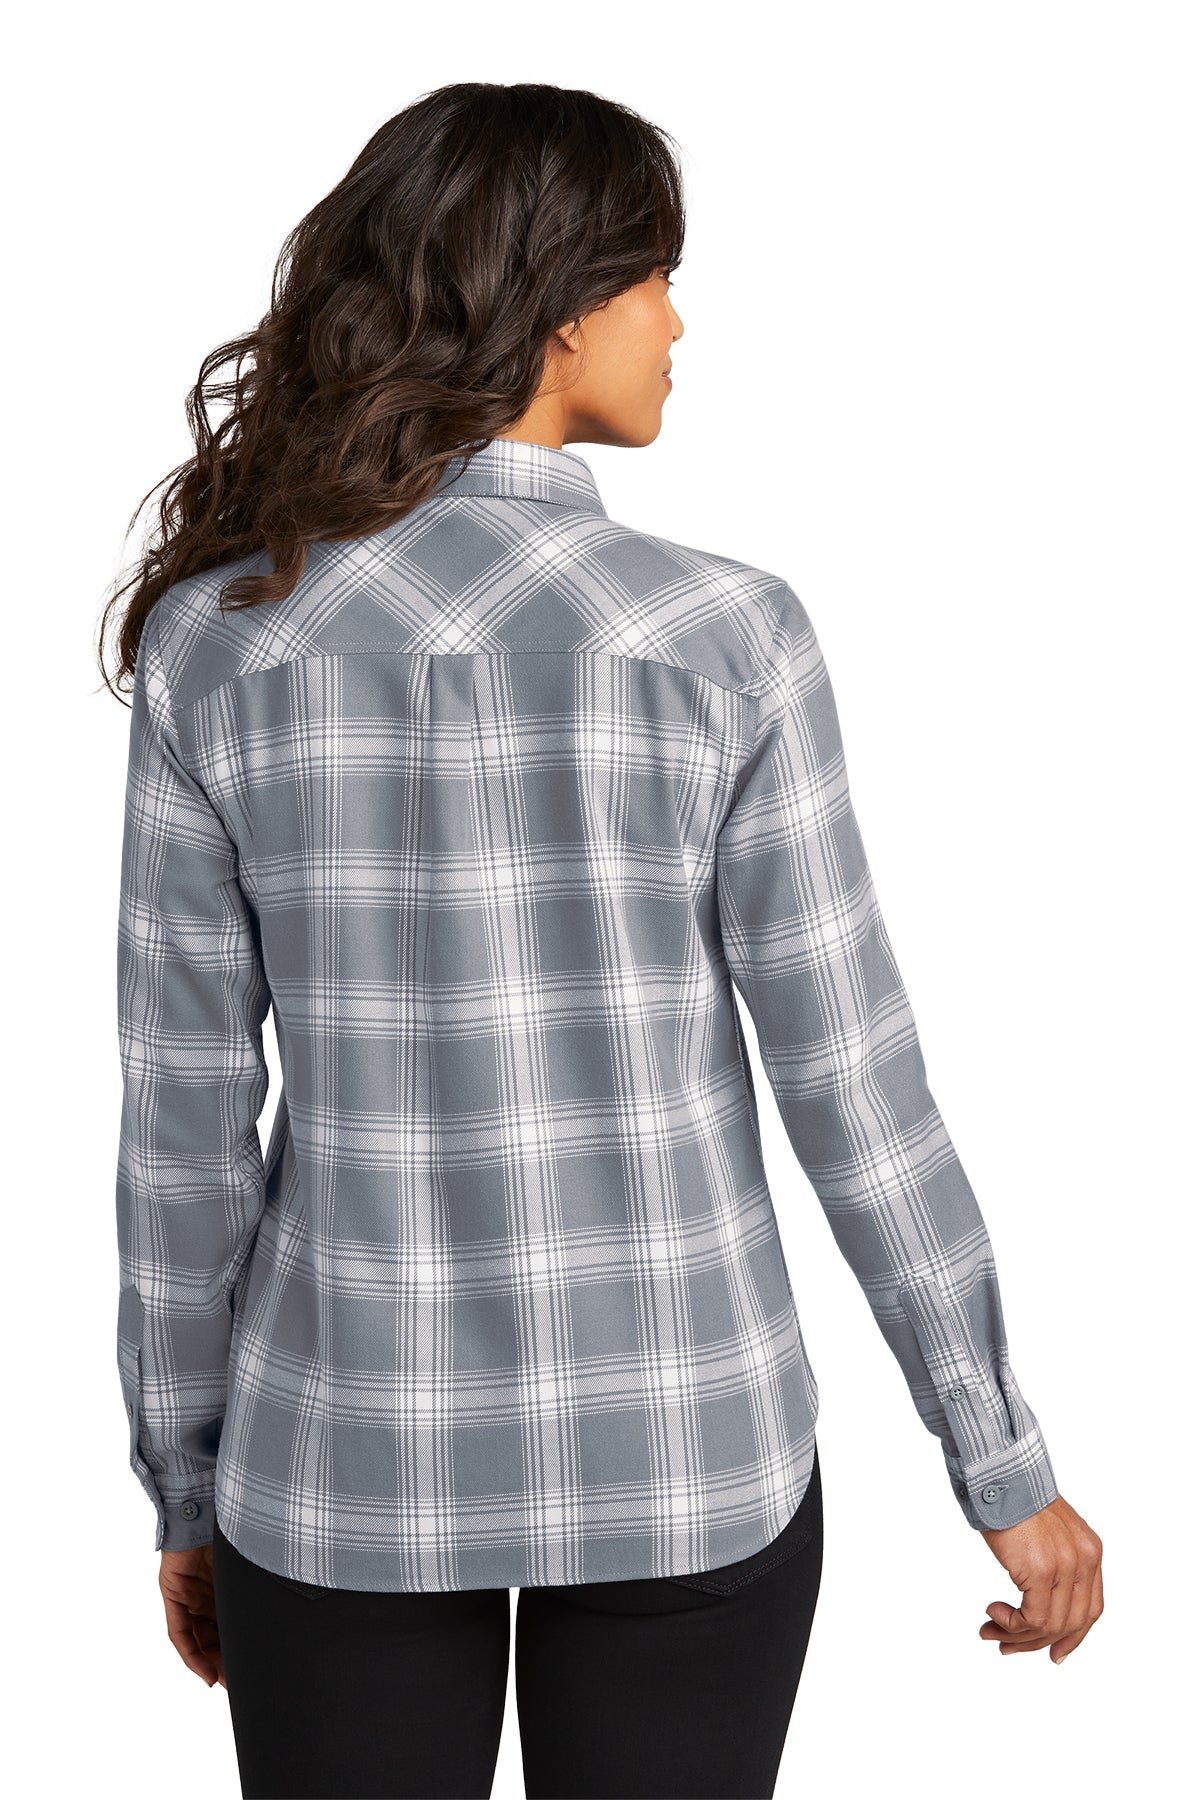 Port Authority Ladies Customized Plaid Flannel Shirts, Grey/ Cream Open Plaid